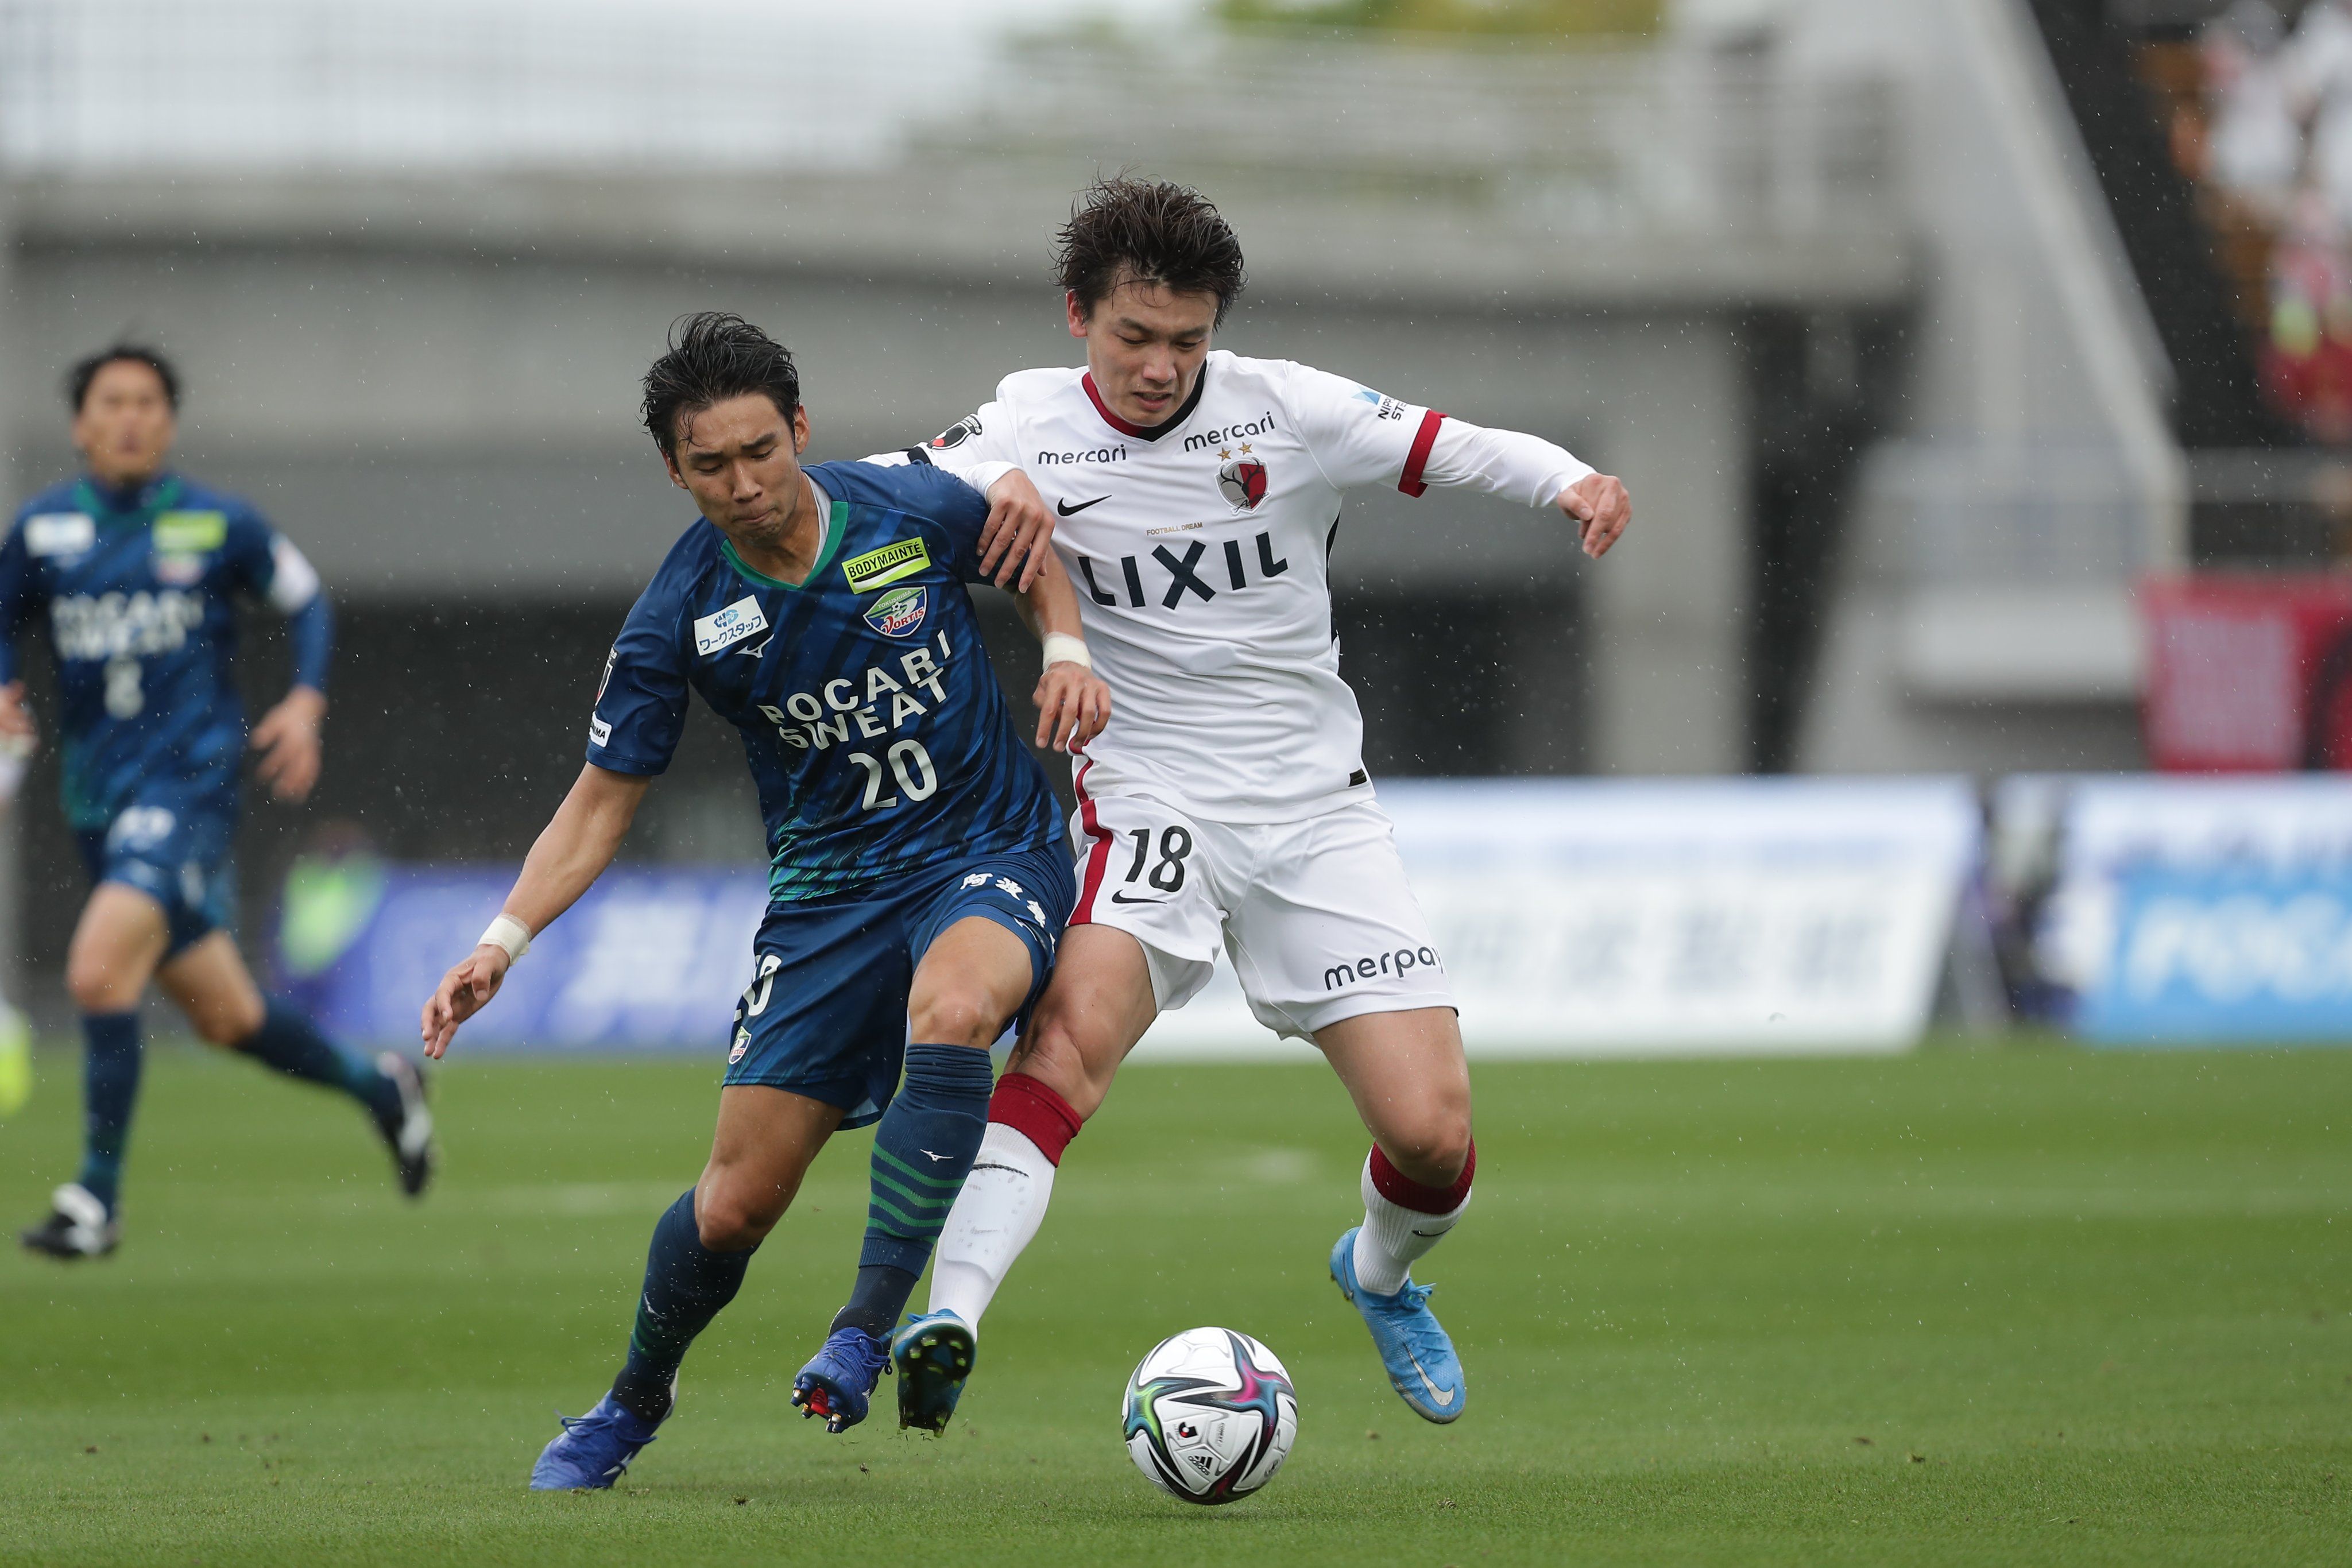 Laga Tokushima Vortis vs Kashima Antlers di Meiji Yasuda J1 League, Sabtu (17/4/2021).